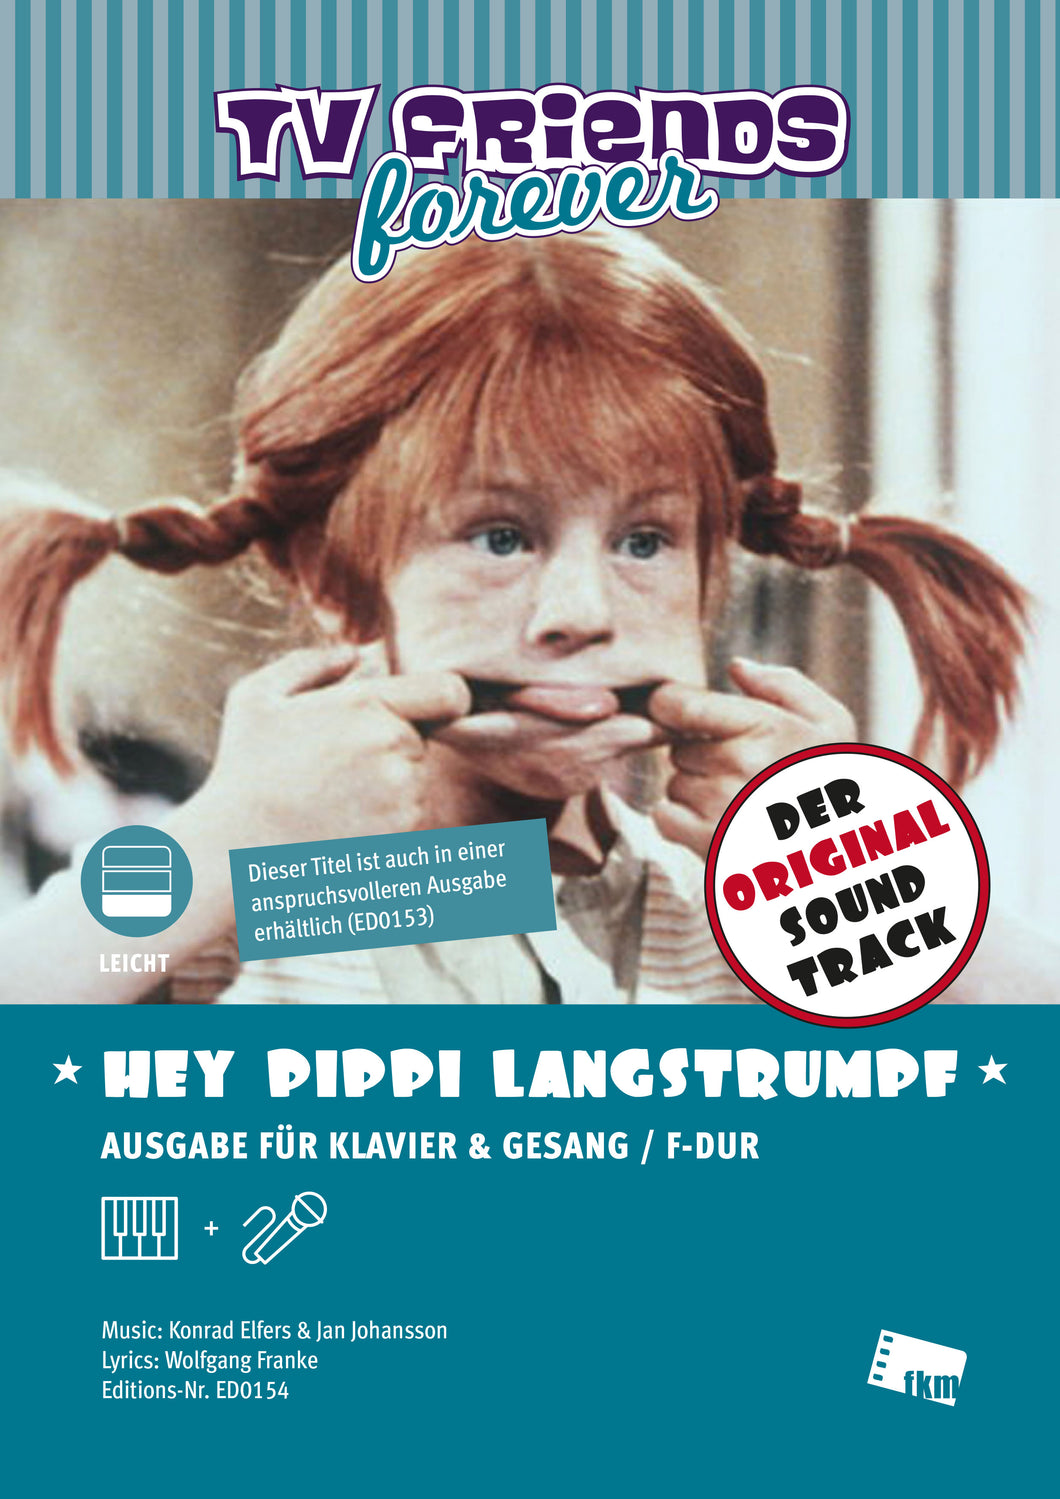 Johansson, Jan: Hey, Pippi Langstrumpf simplified (Piano & Vocal) - Sheet Music Download